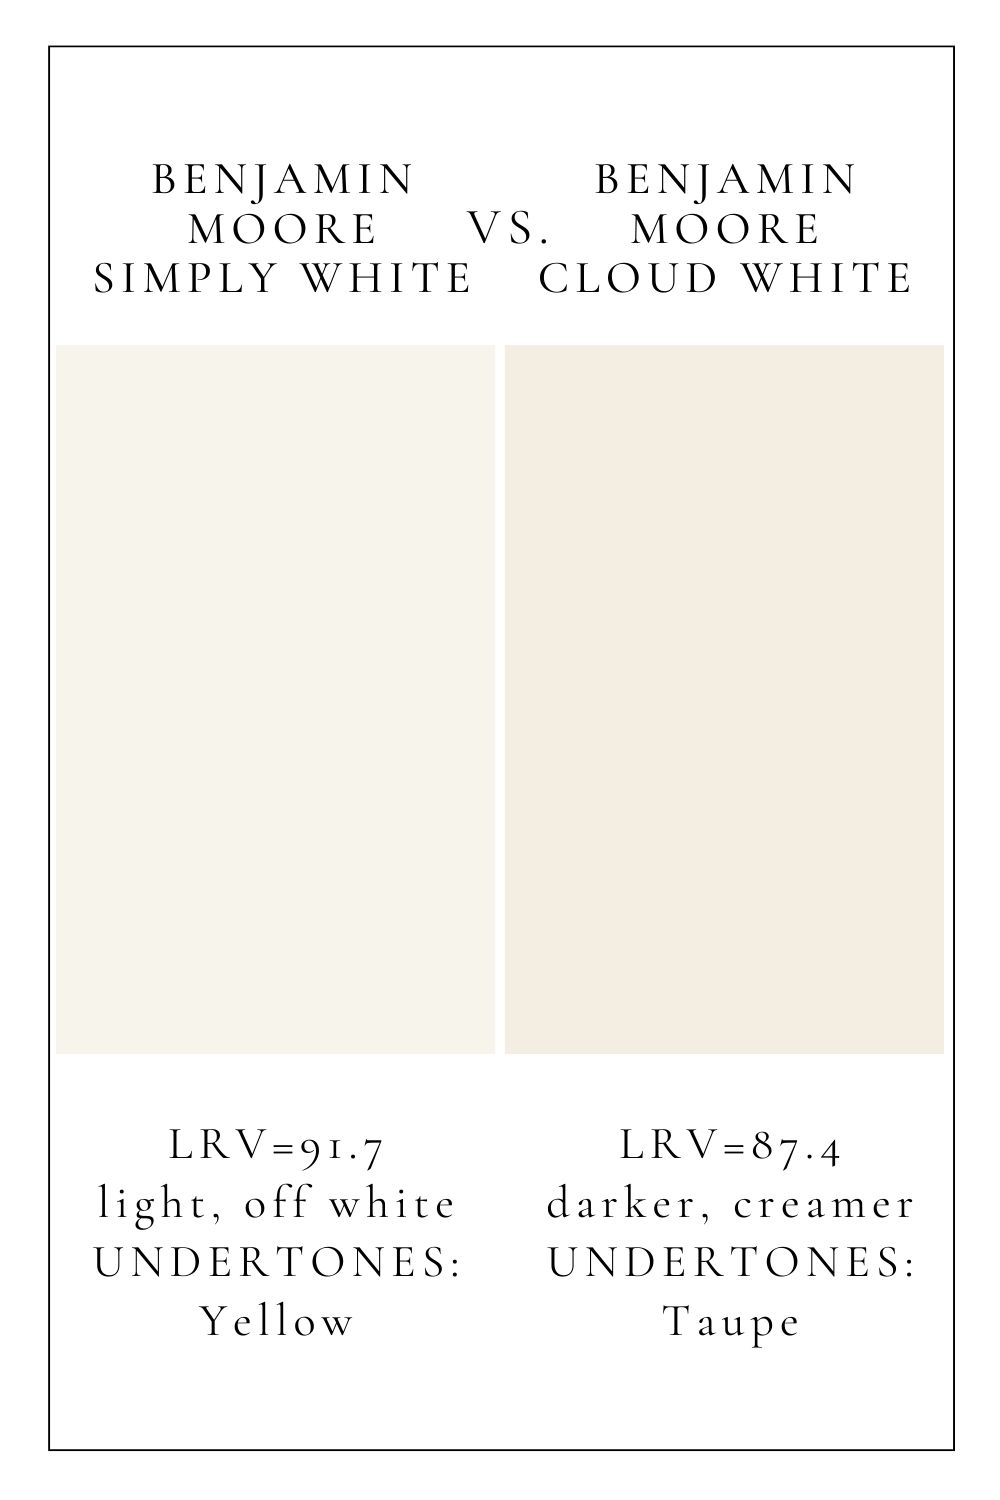 BM Simply White vs BM Cloud White